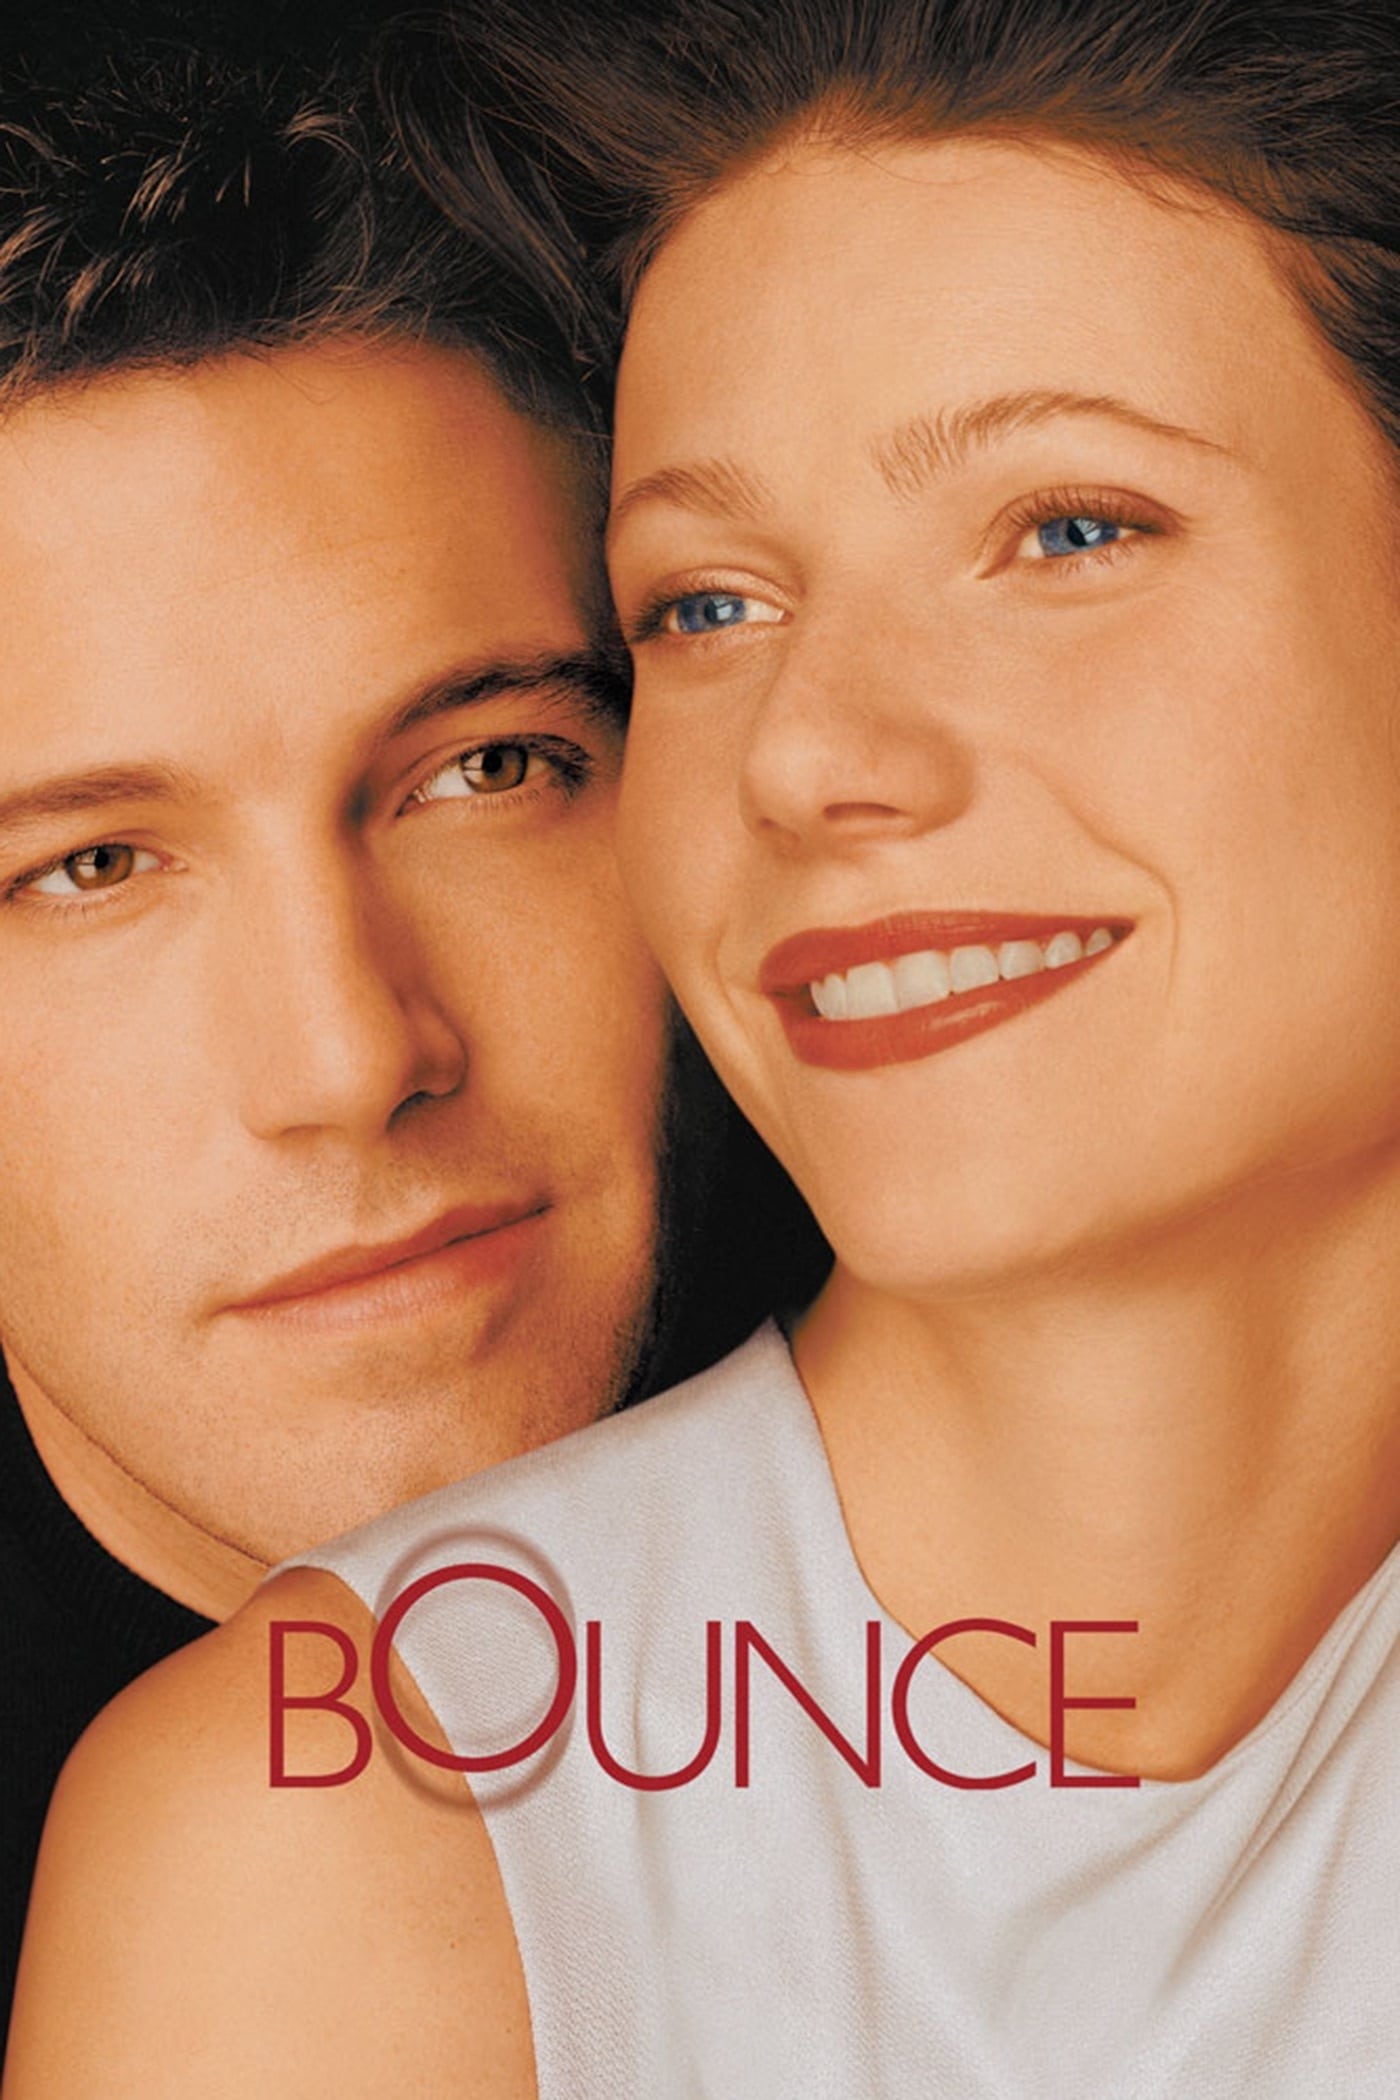 Bounce (2000)